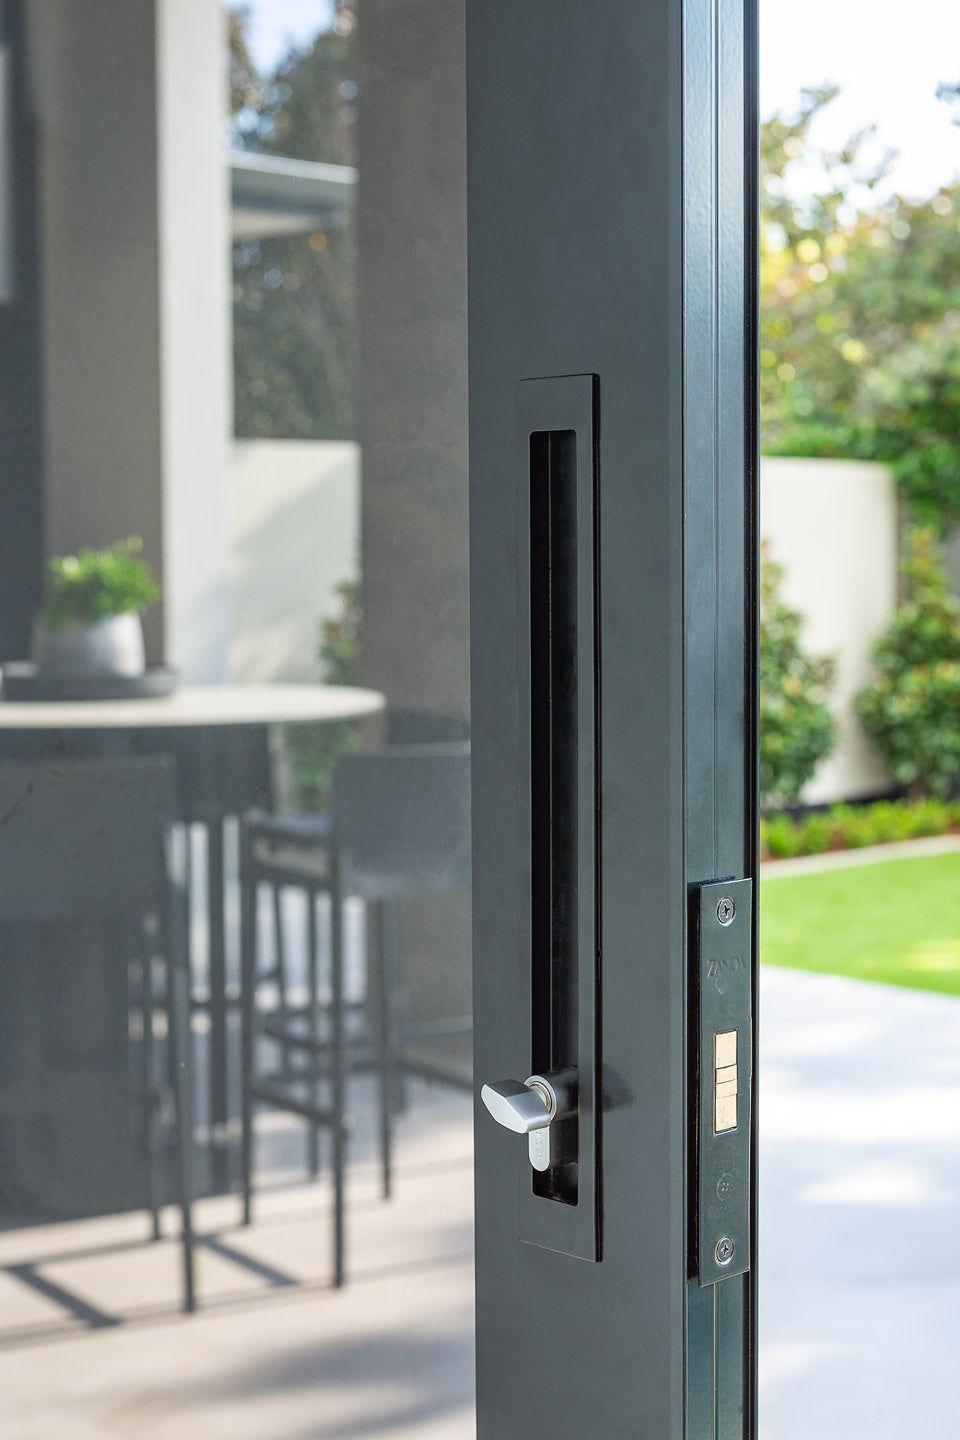 Interior look at the Matt Black sliding door kit installed on a dark grey door with a view to the backyard.